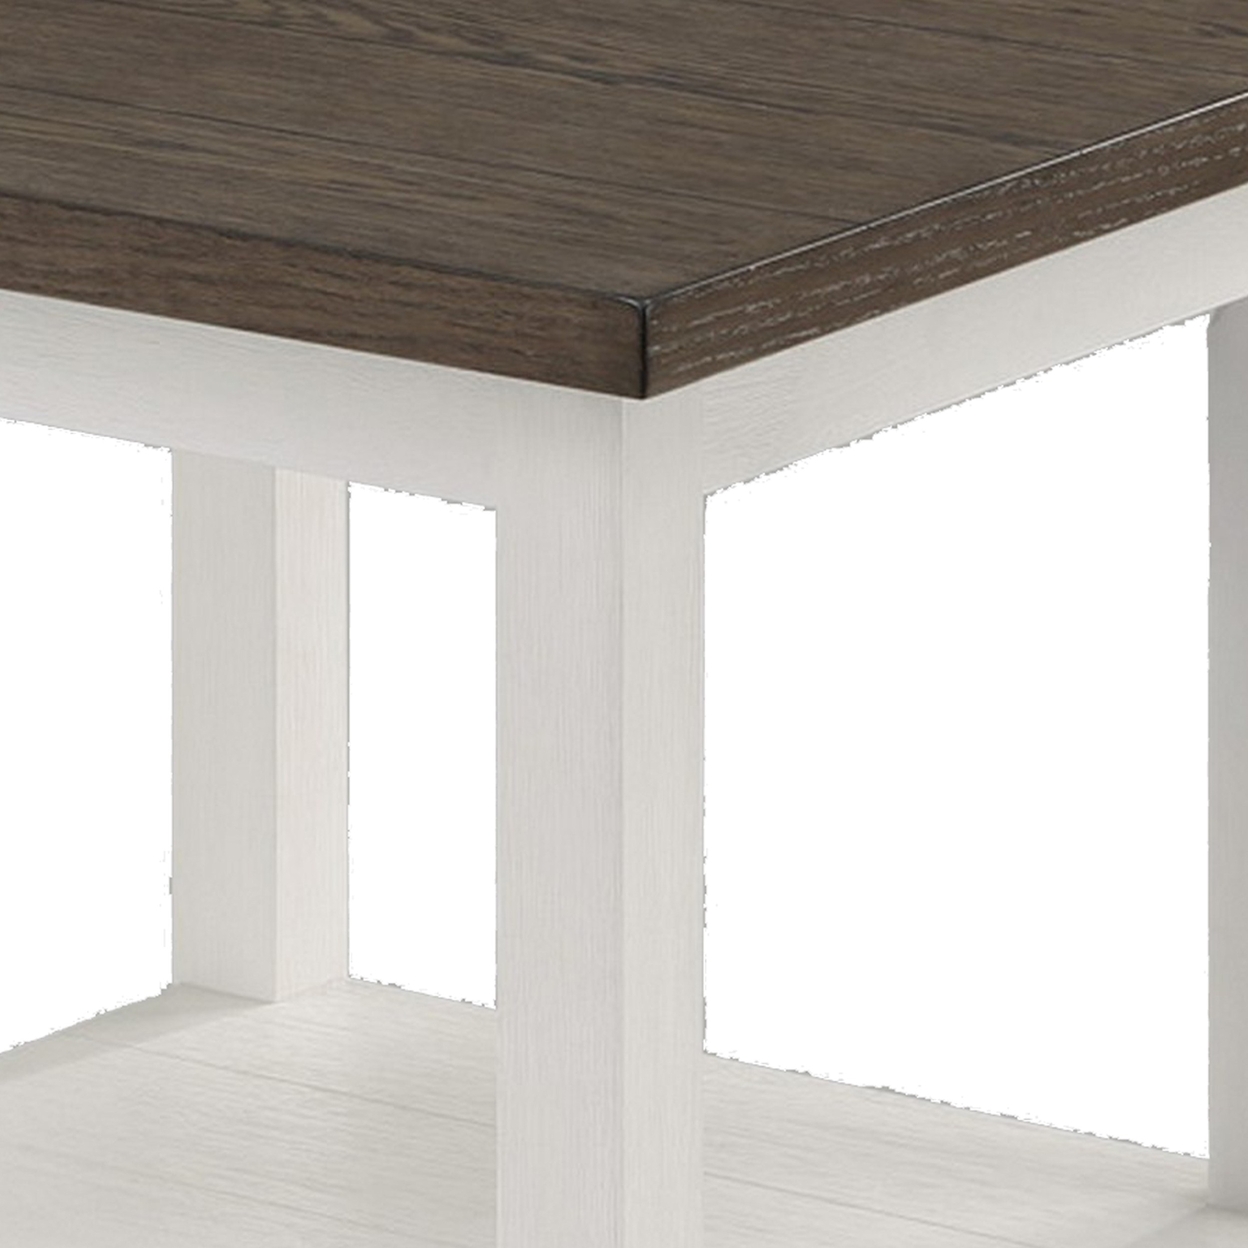 Mon 24 Inch Square End Table, Open Bottom Shelf, Brown Top, White Frame- Saltoro Sherpi